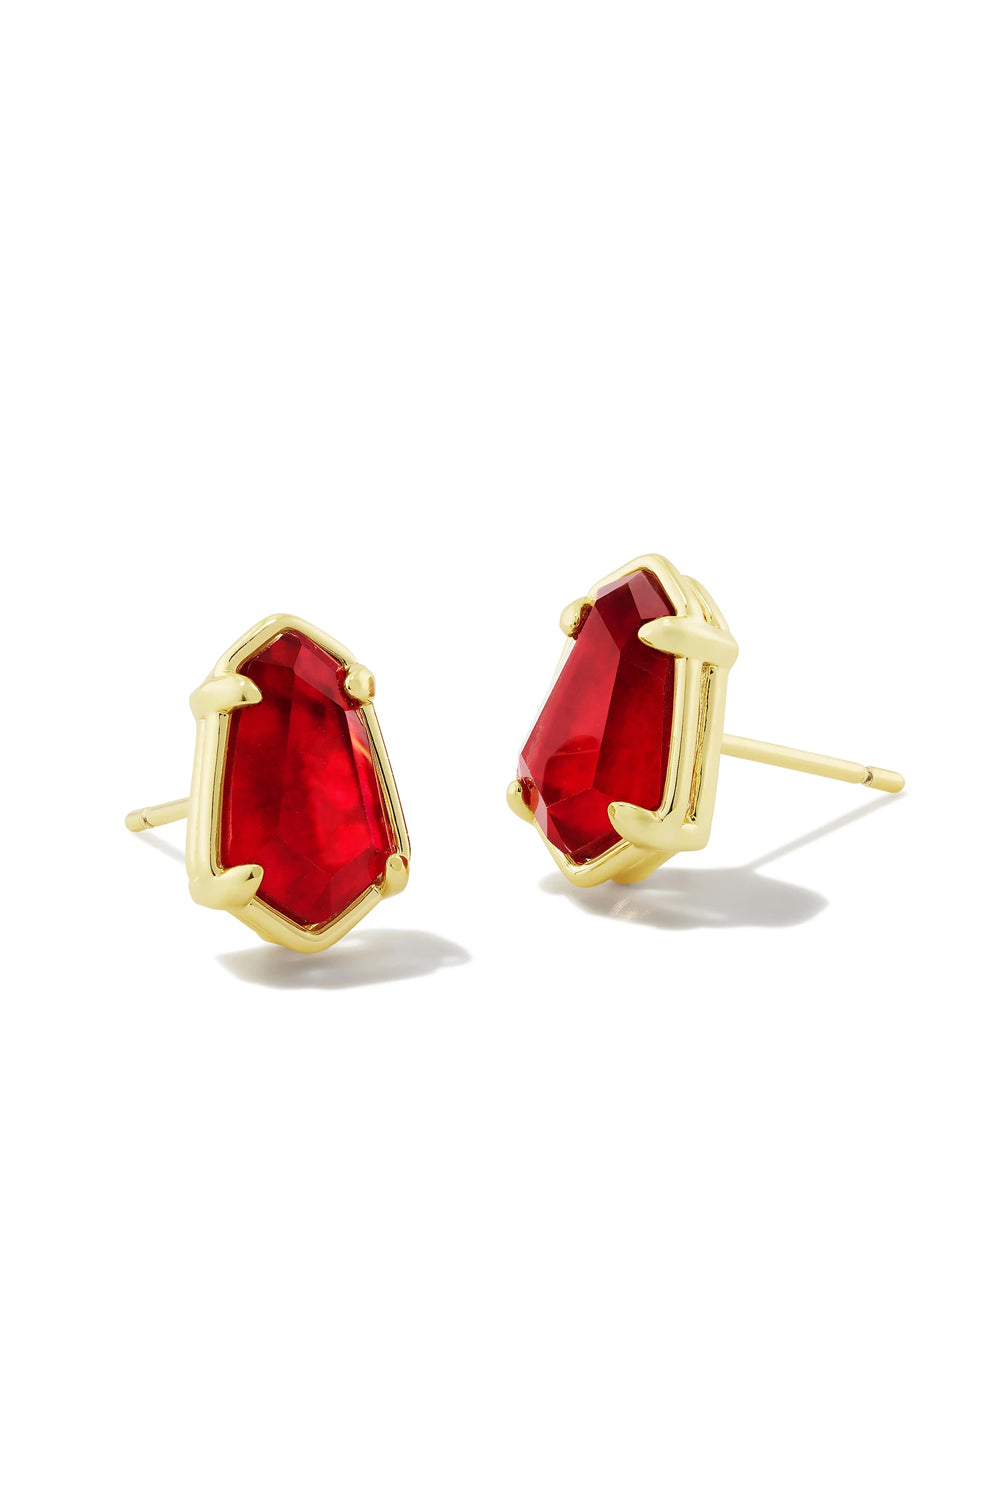 Kendra Scott: Alexandria Gold Stud Earrings - Cranberry Illusion | Makk Fashions